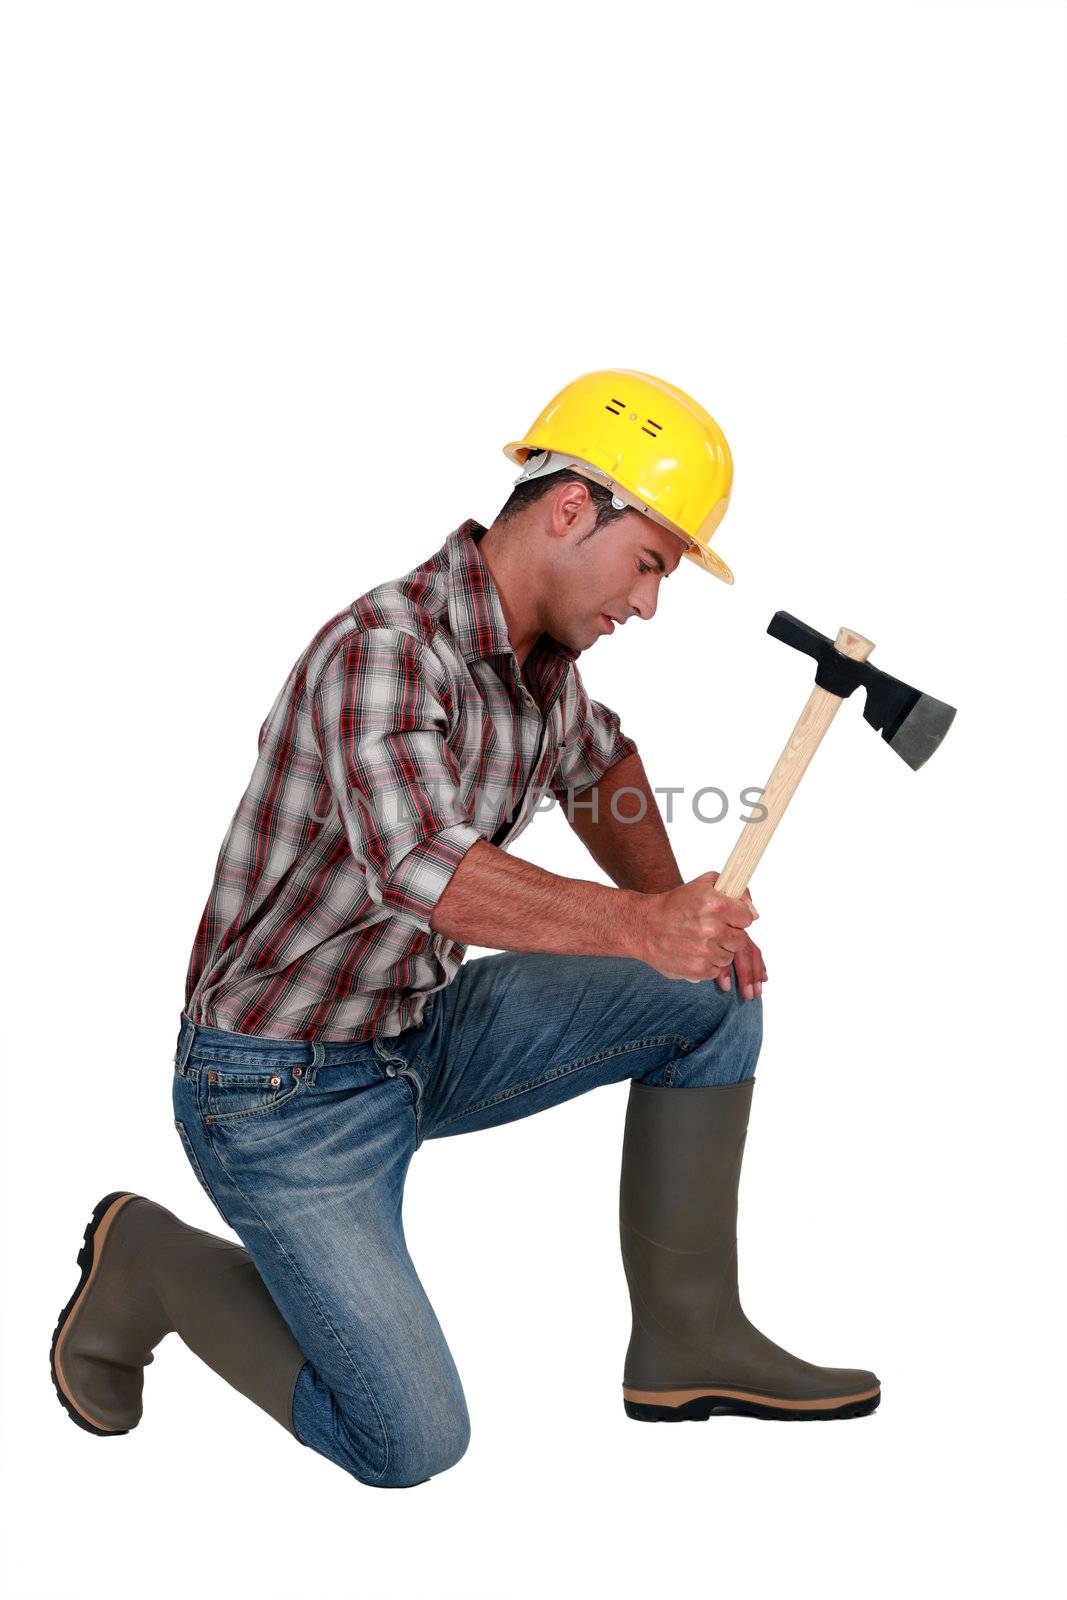 Tradesman using an axe by phovoir